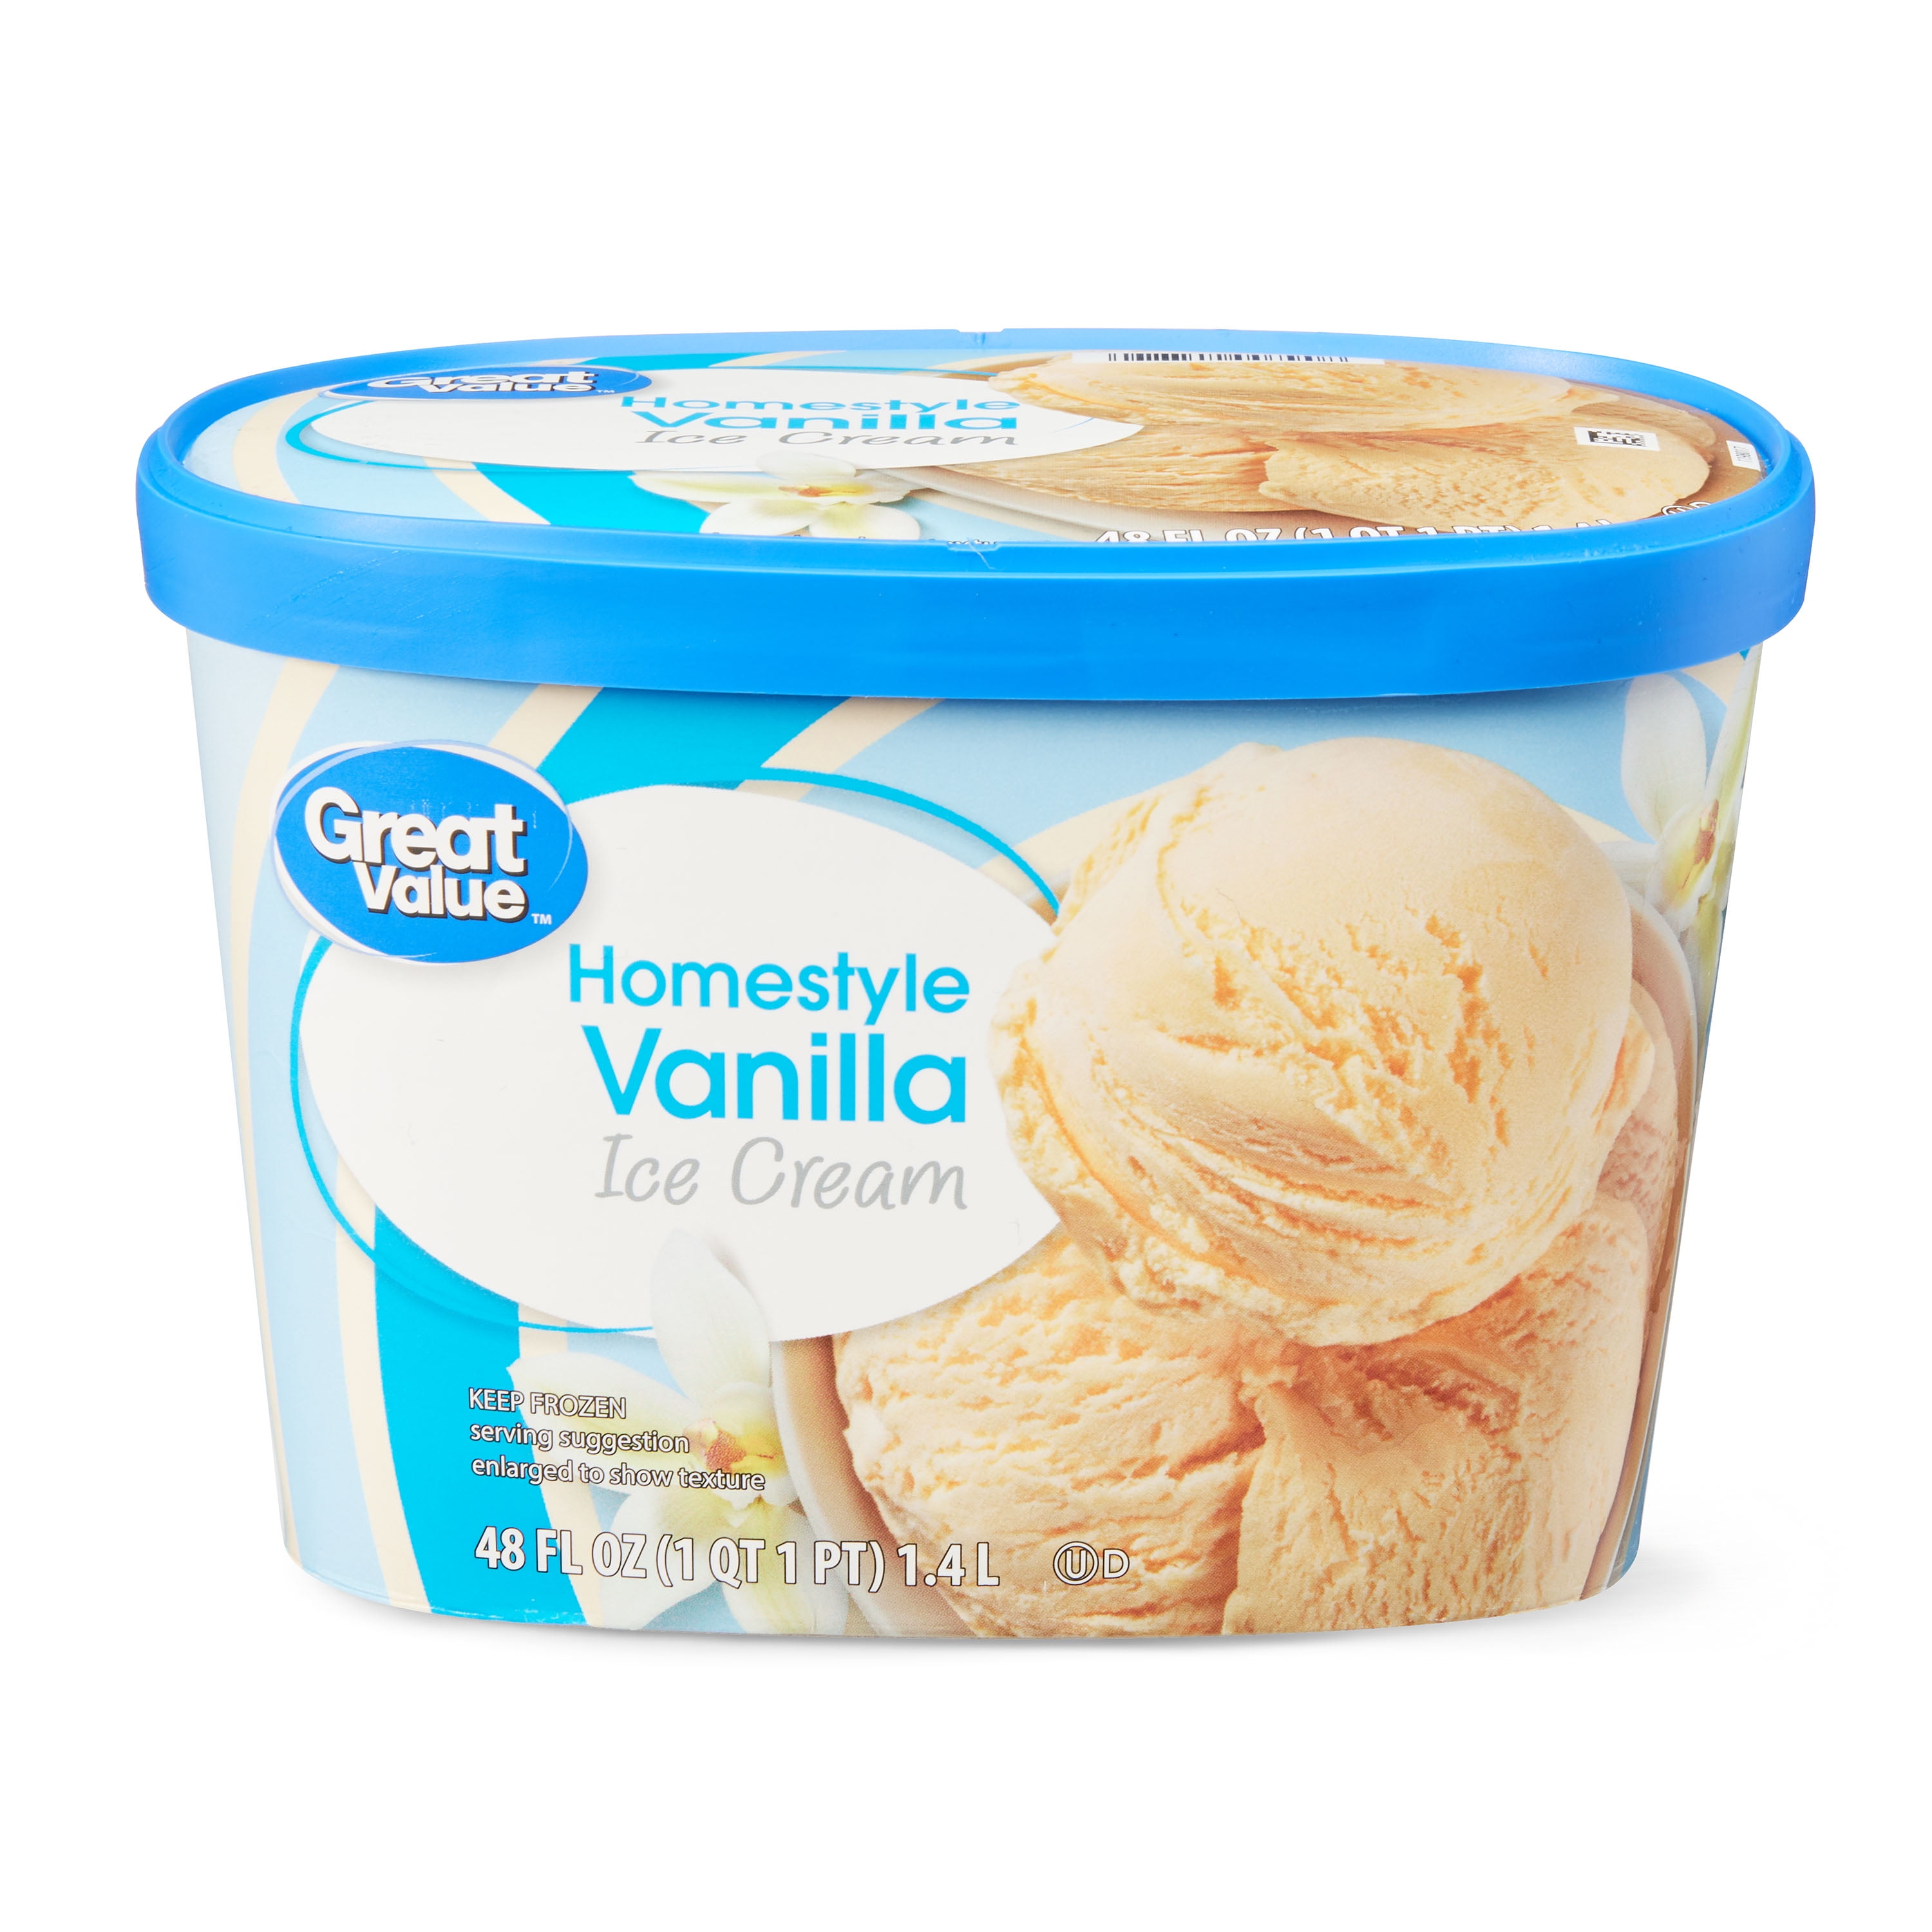 Great Value Homestyle Vanilla Ice Cream, 48 fl oz - Walmart.com -  Walmart.com